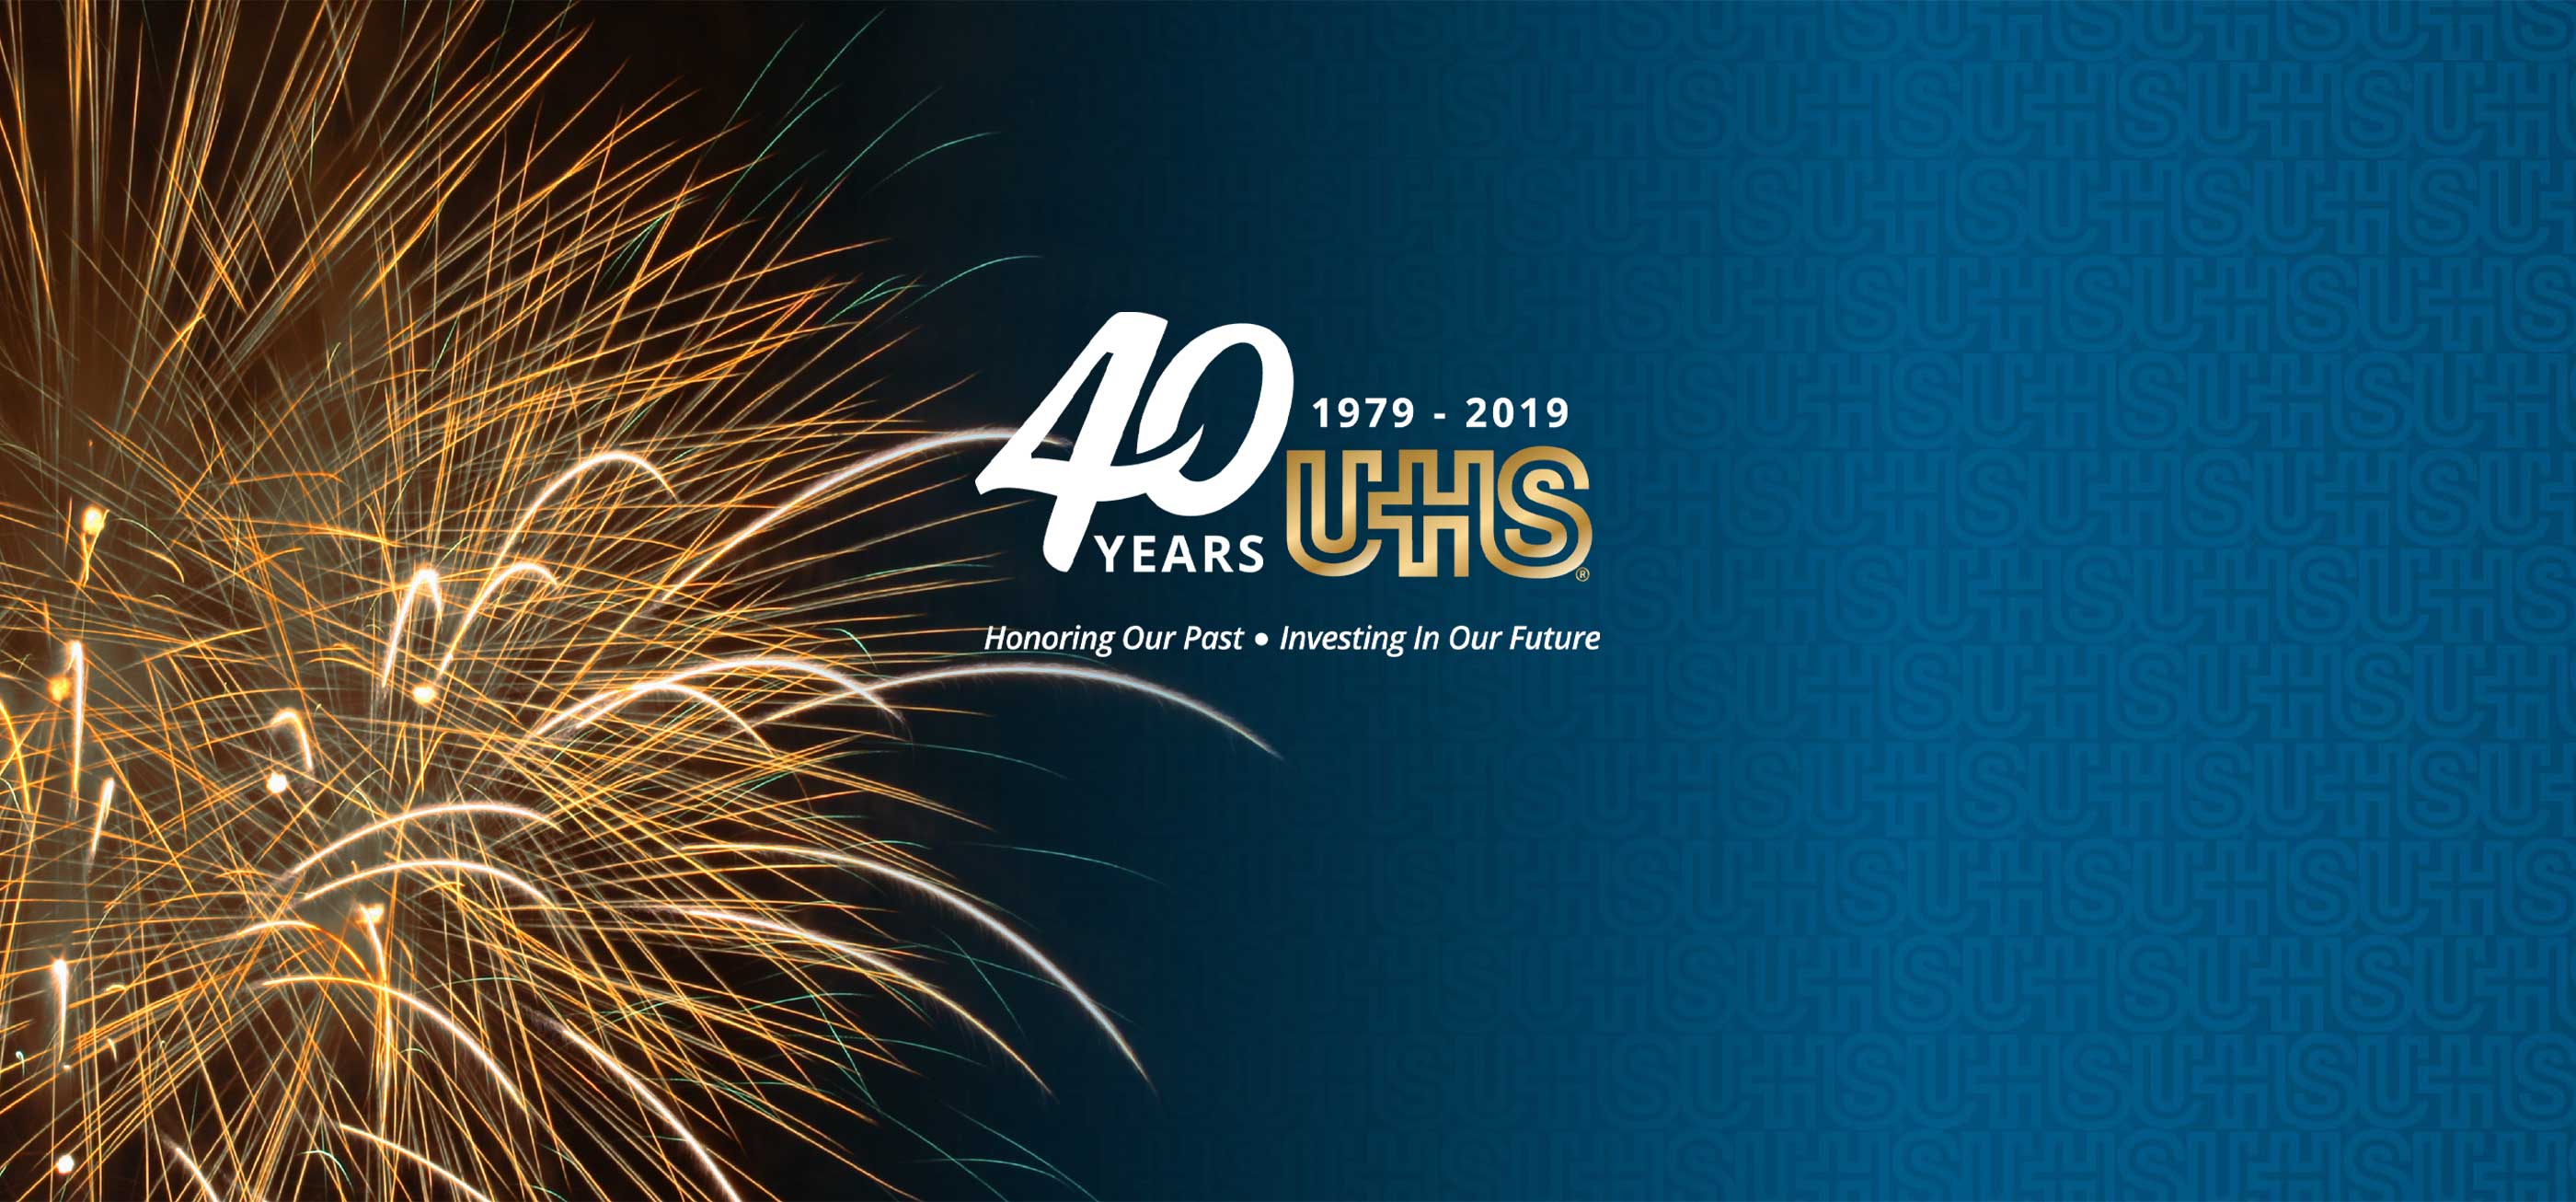 UHS 40 years